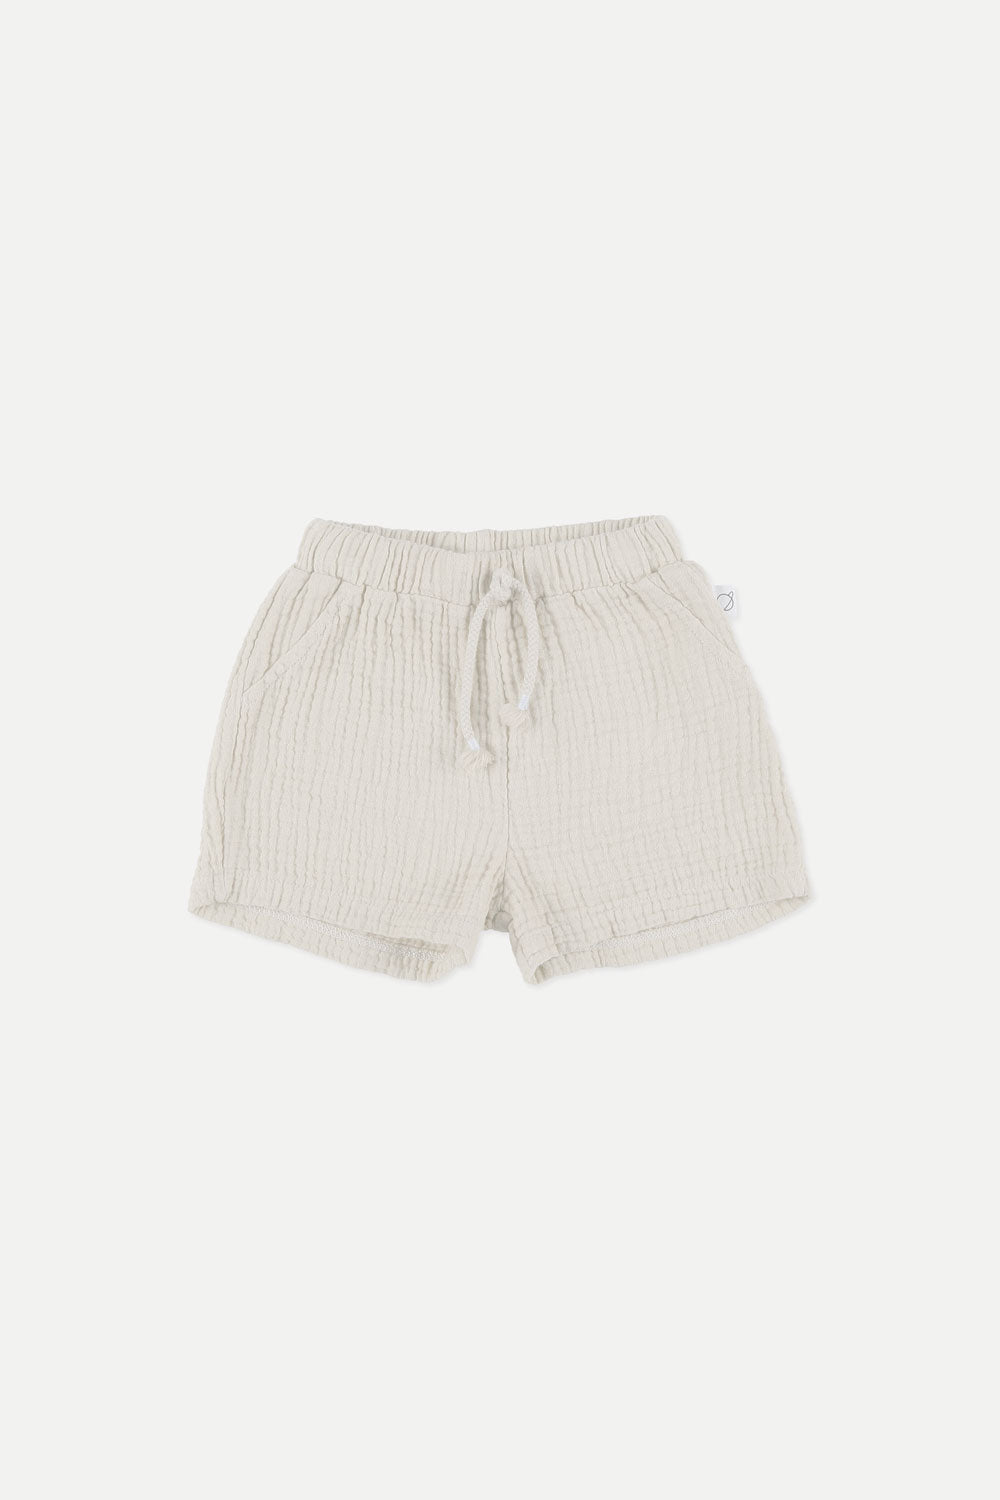 My little cozmo - adri264 - cotton shorts - ivory